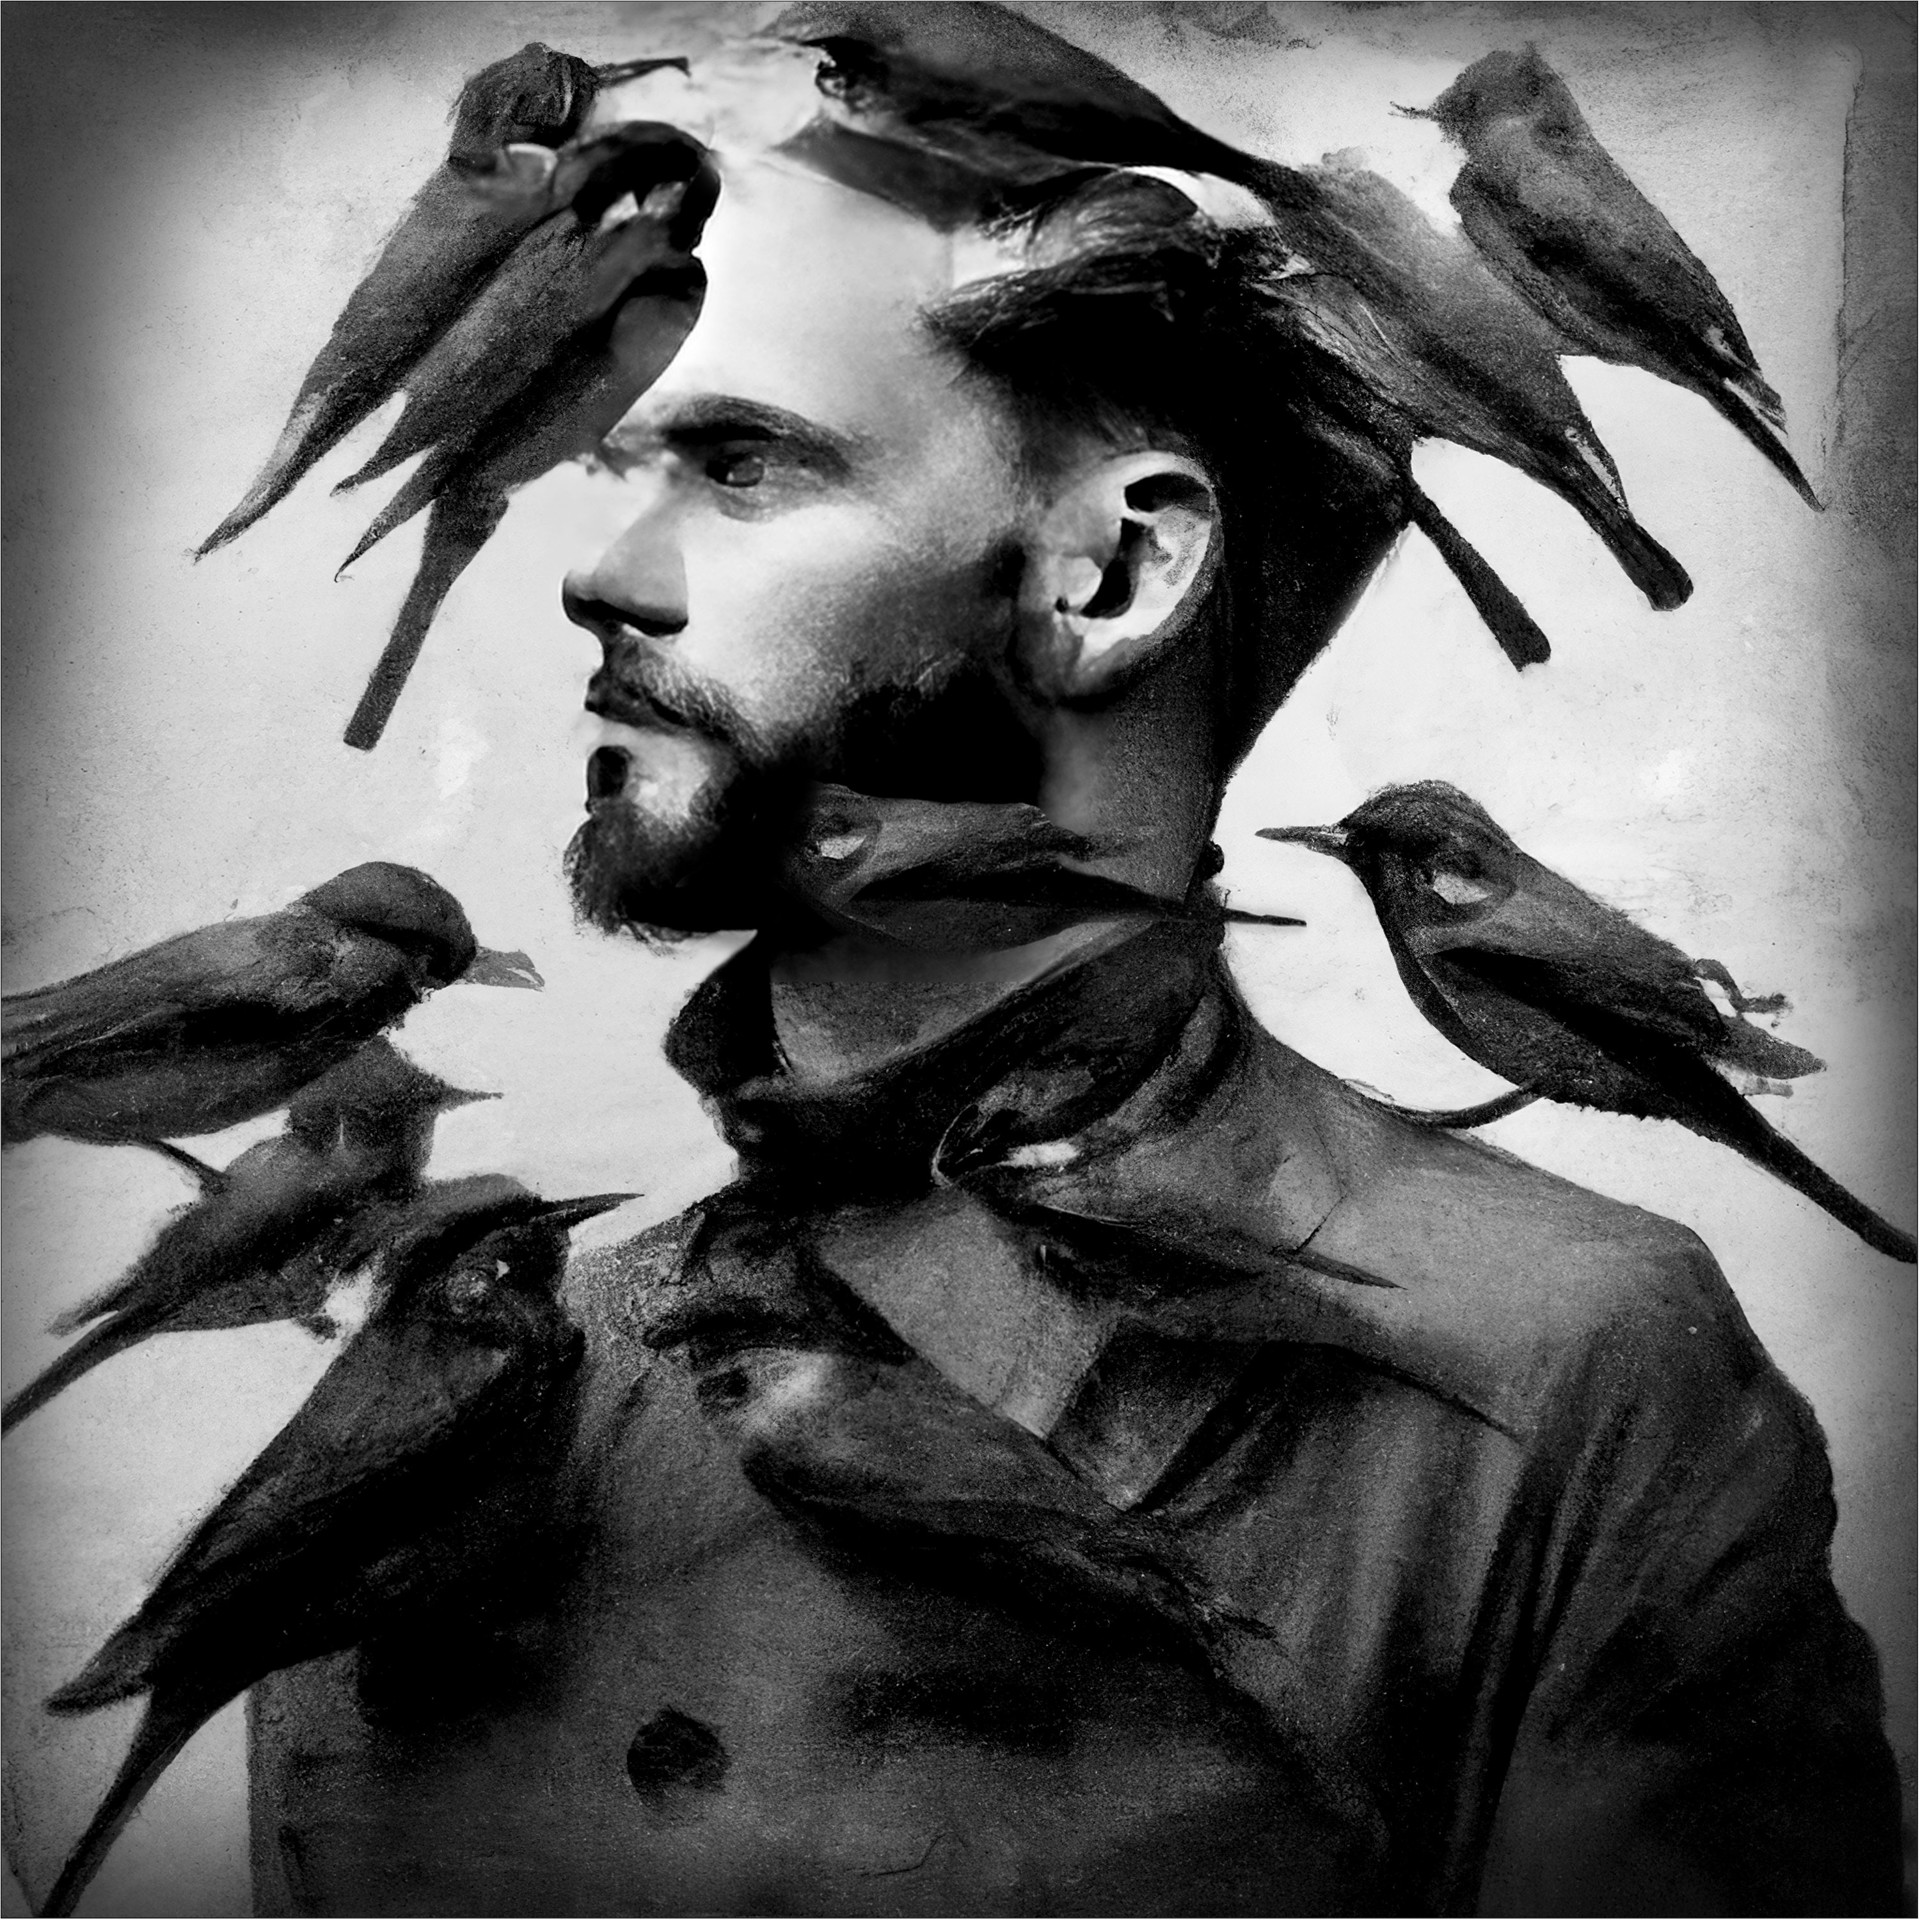 Man with Birds by Francis Olschafskie